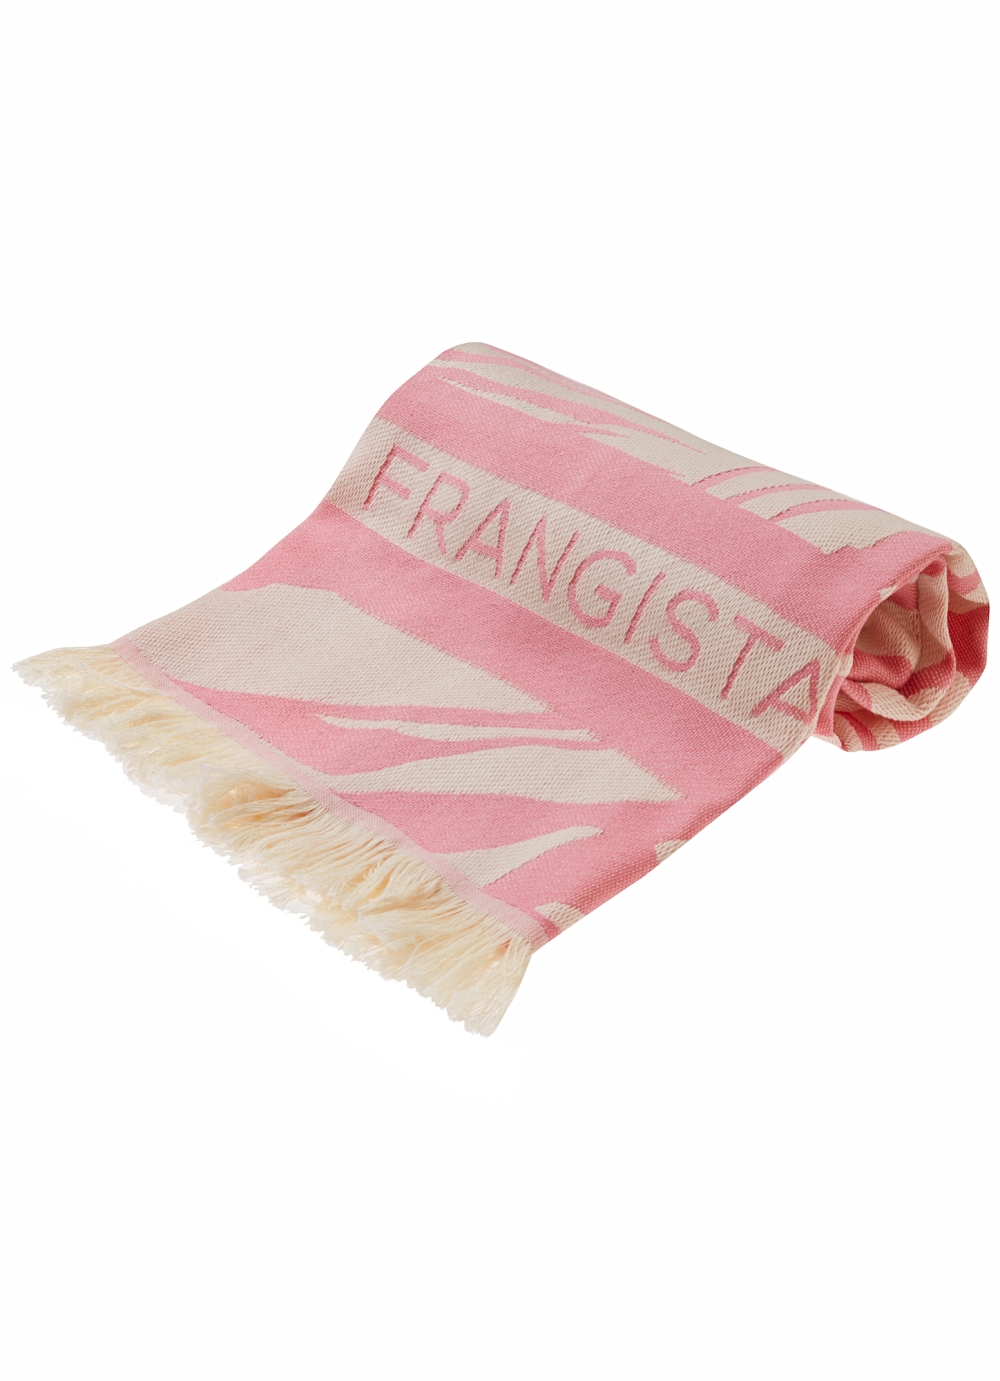 FRANGISTA Towel Zebra | Pink STEFANIA Beach